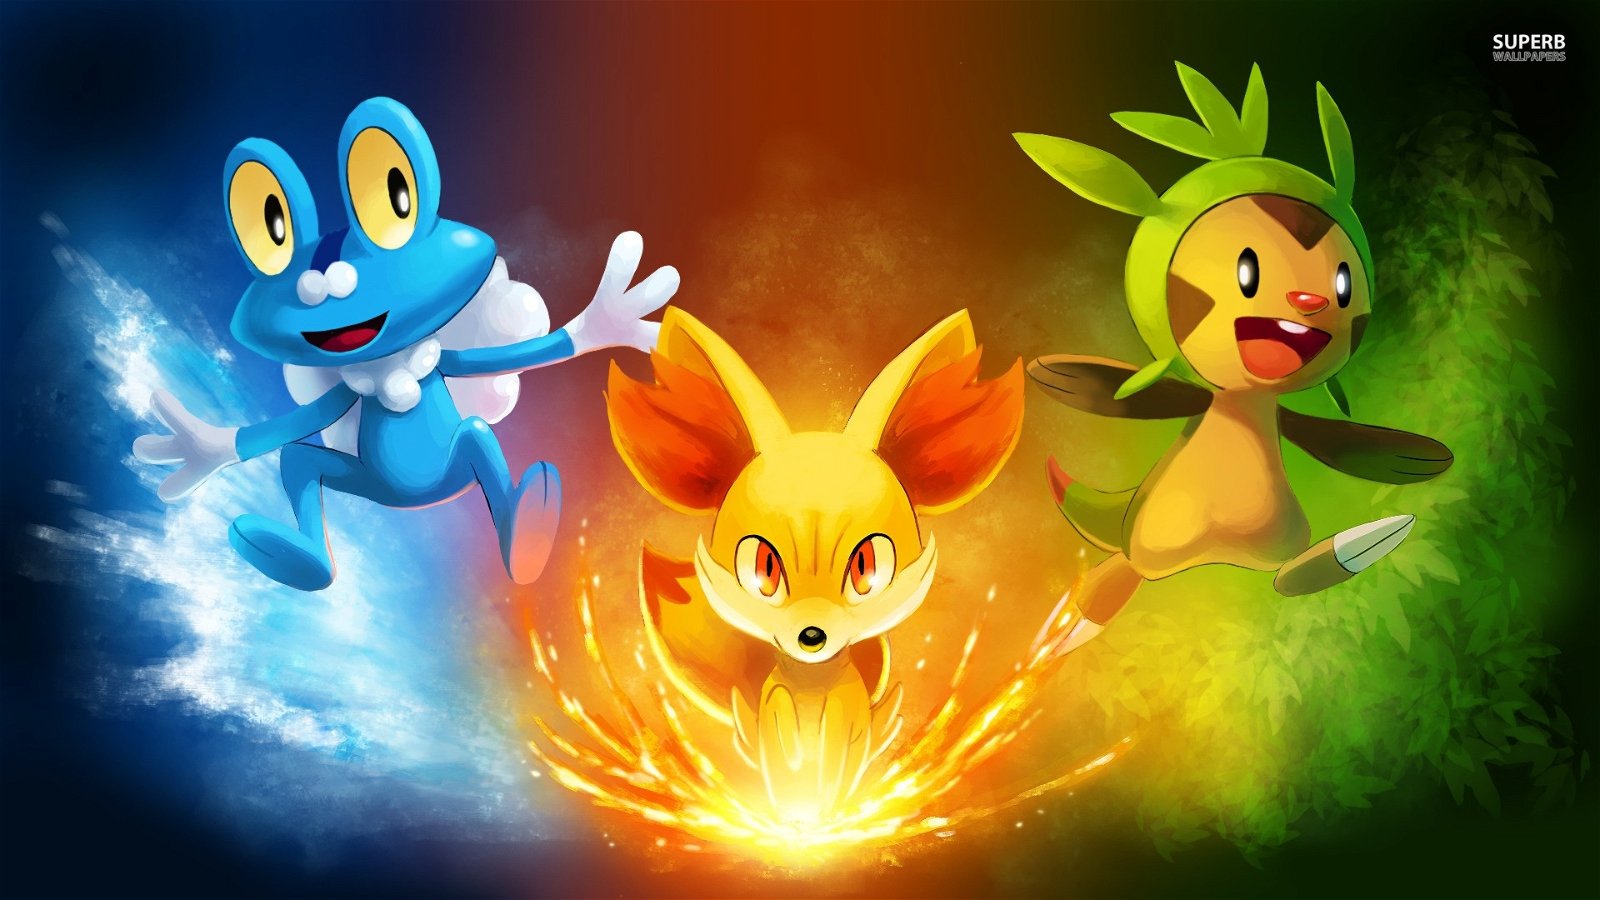 Pokémon: 10 fondos de pantalla que querrás ponerte al instante